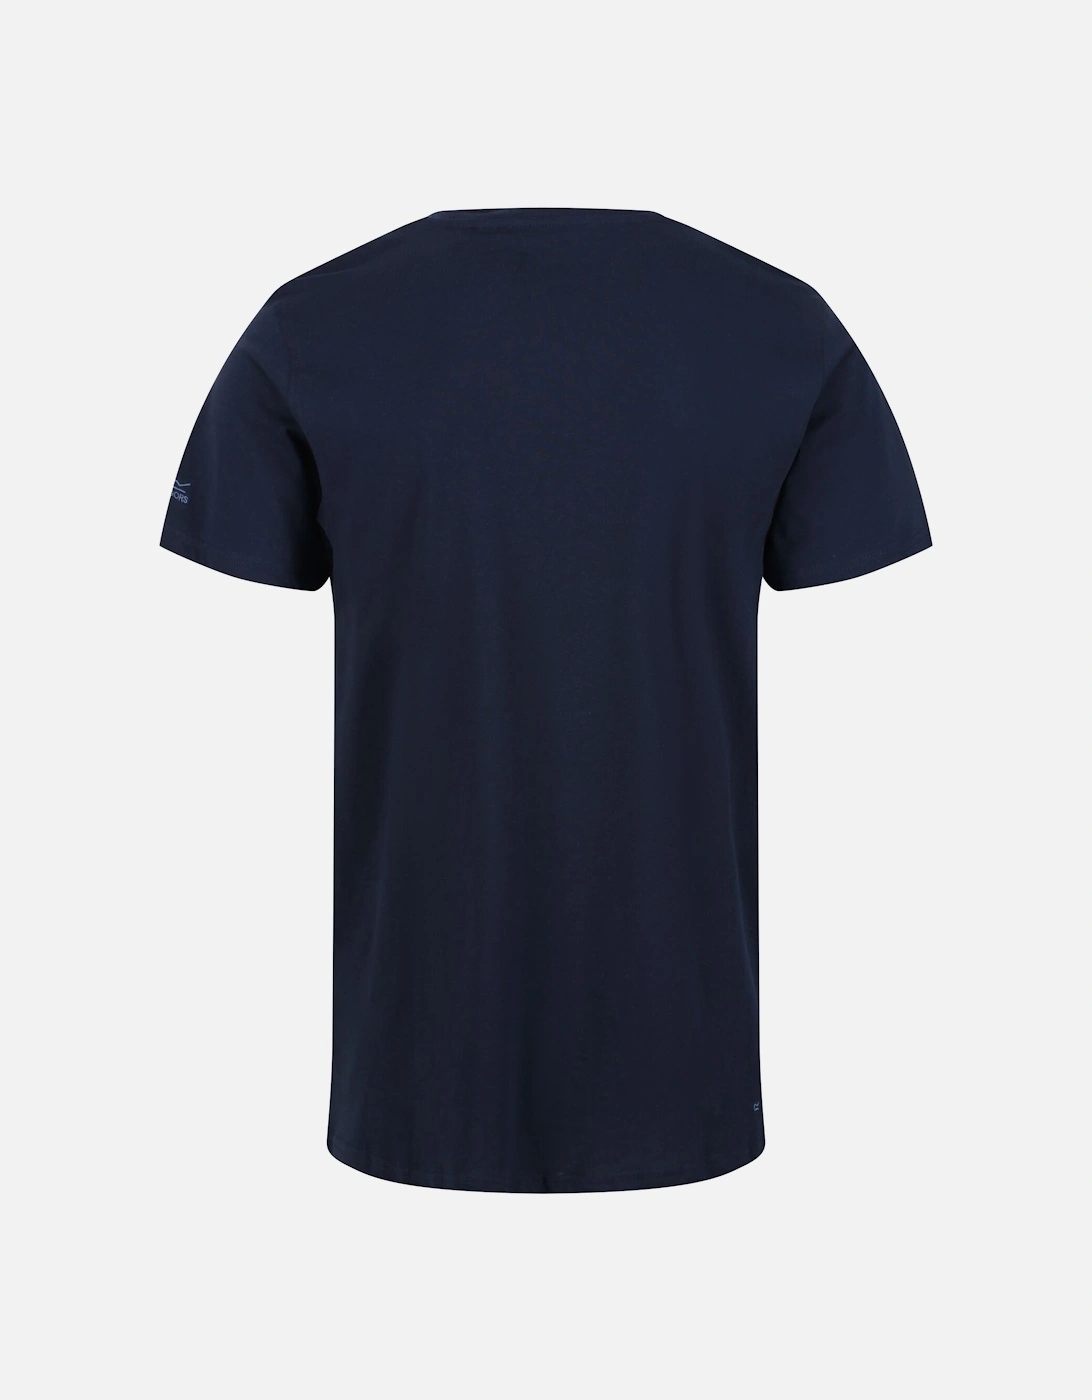 Mens Cline VI Sunset Cotton T-Shirt